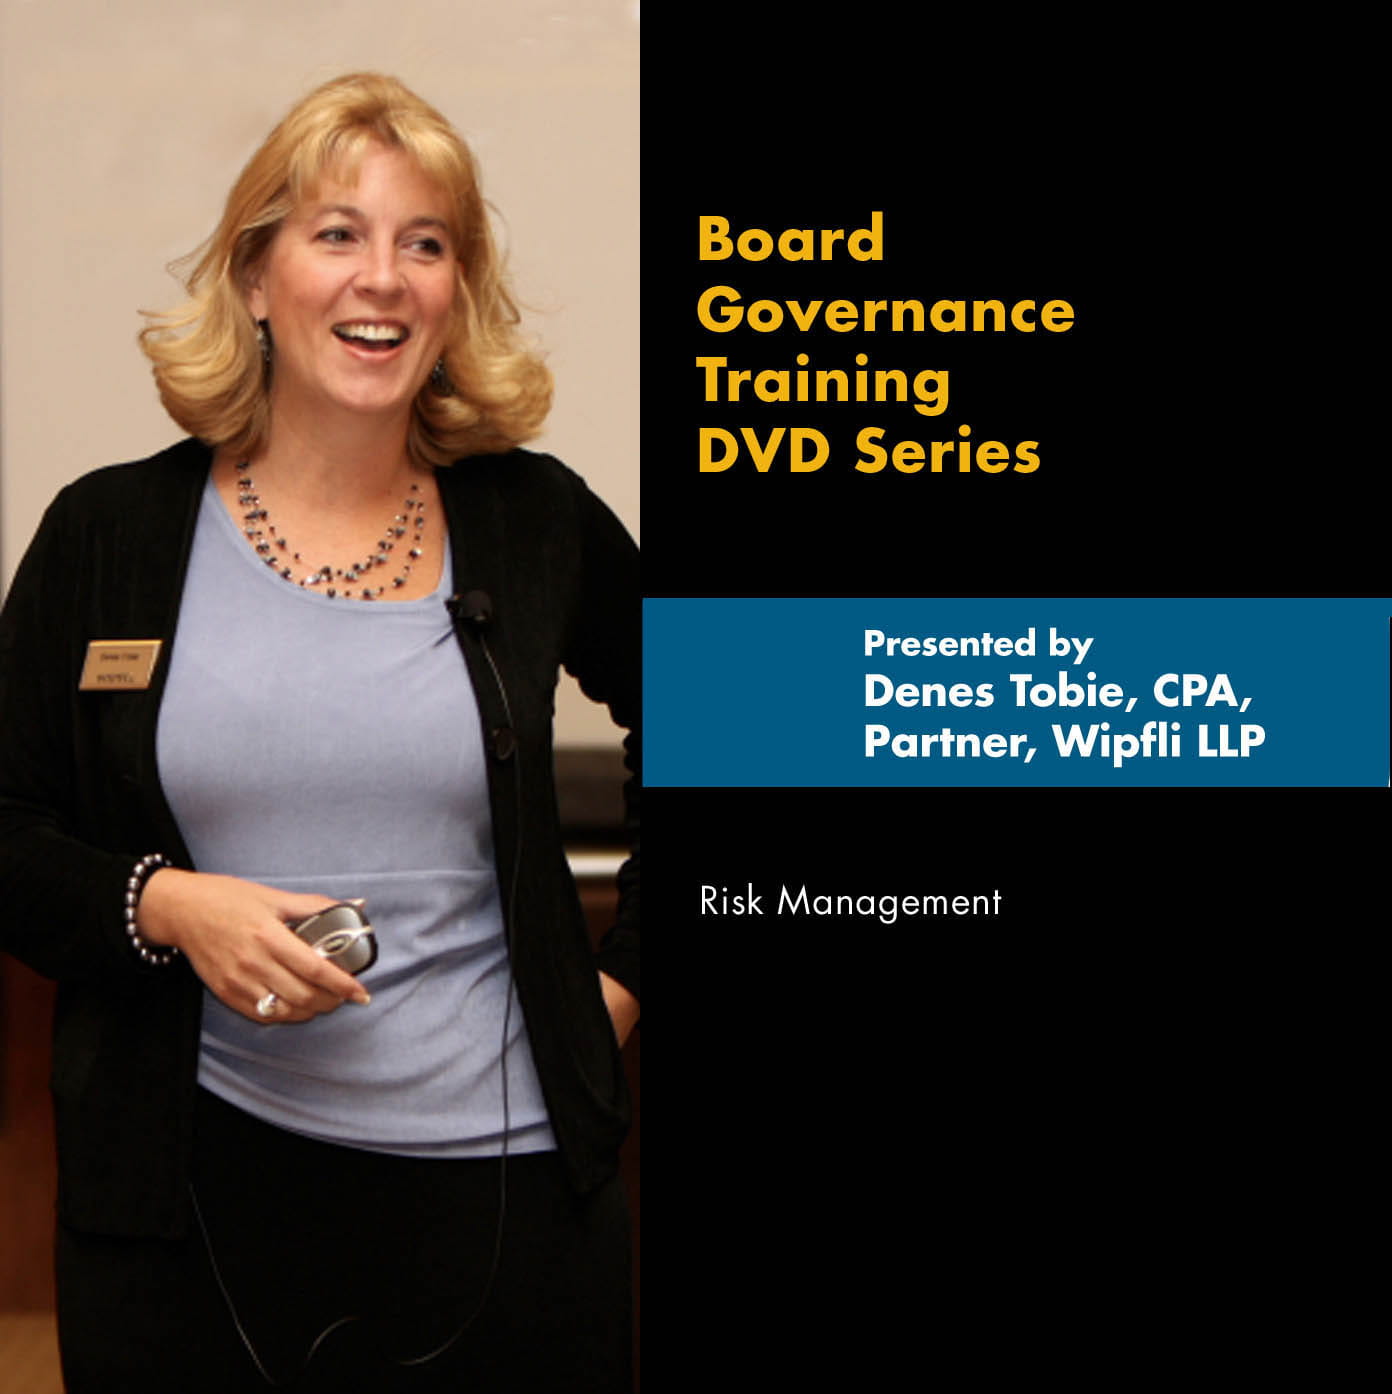 Video: Board Governance Training DVD Series